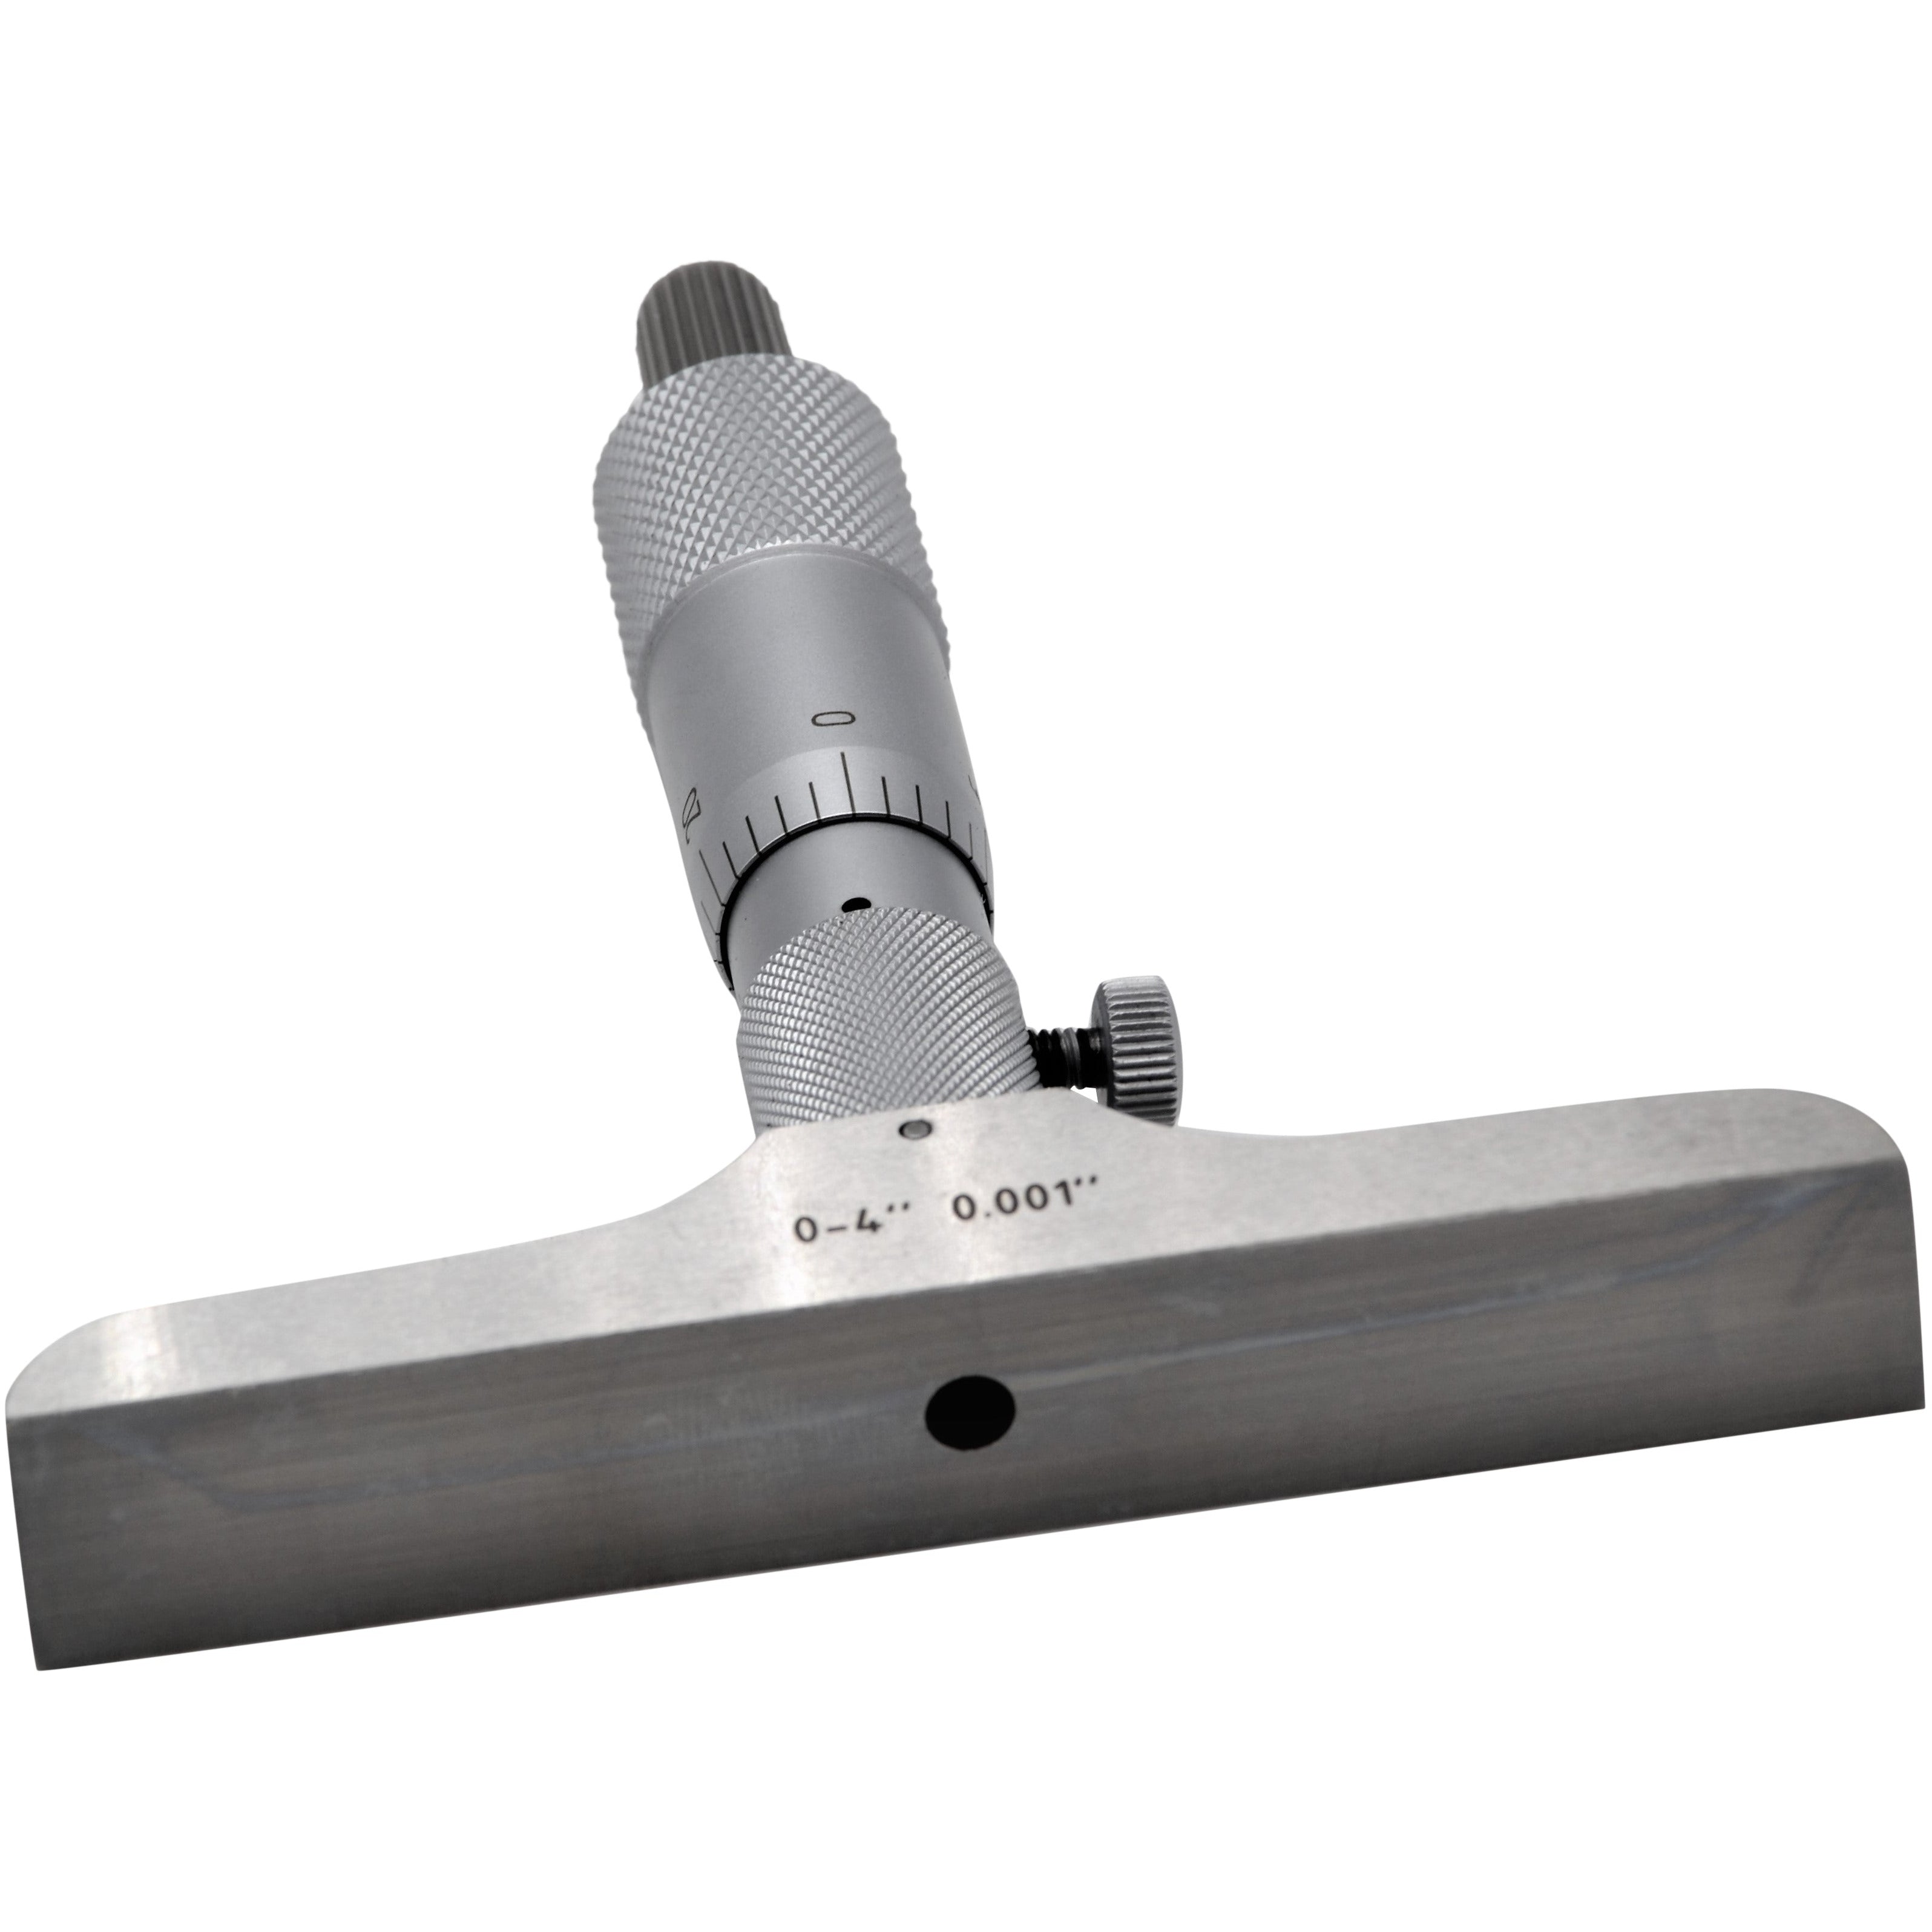 Insize Imperial Depth Micrometer 0-4" Range Series 3240 - 4